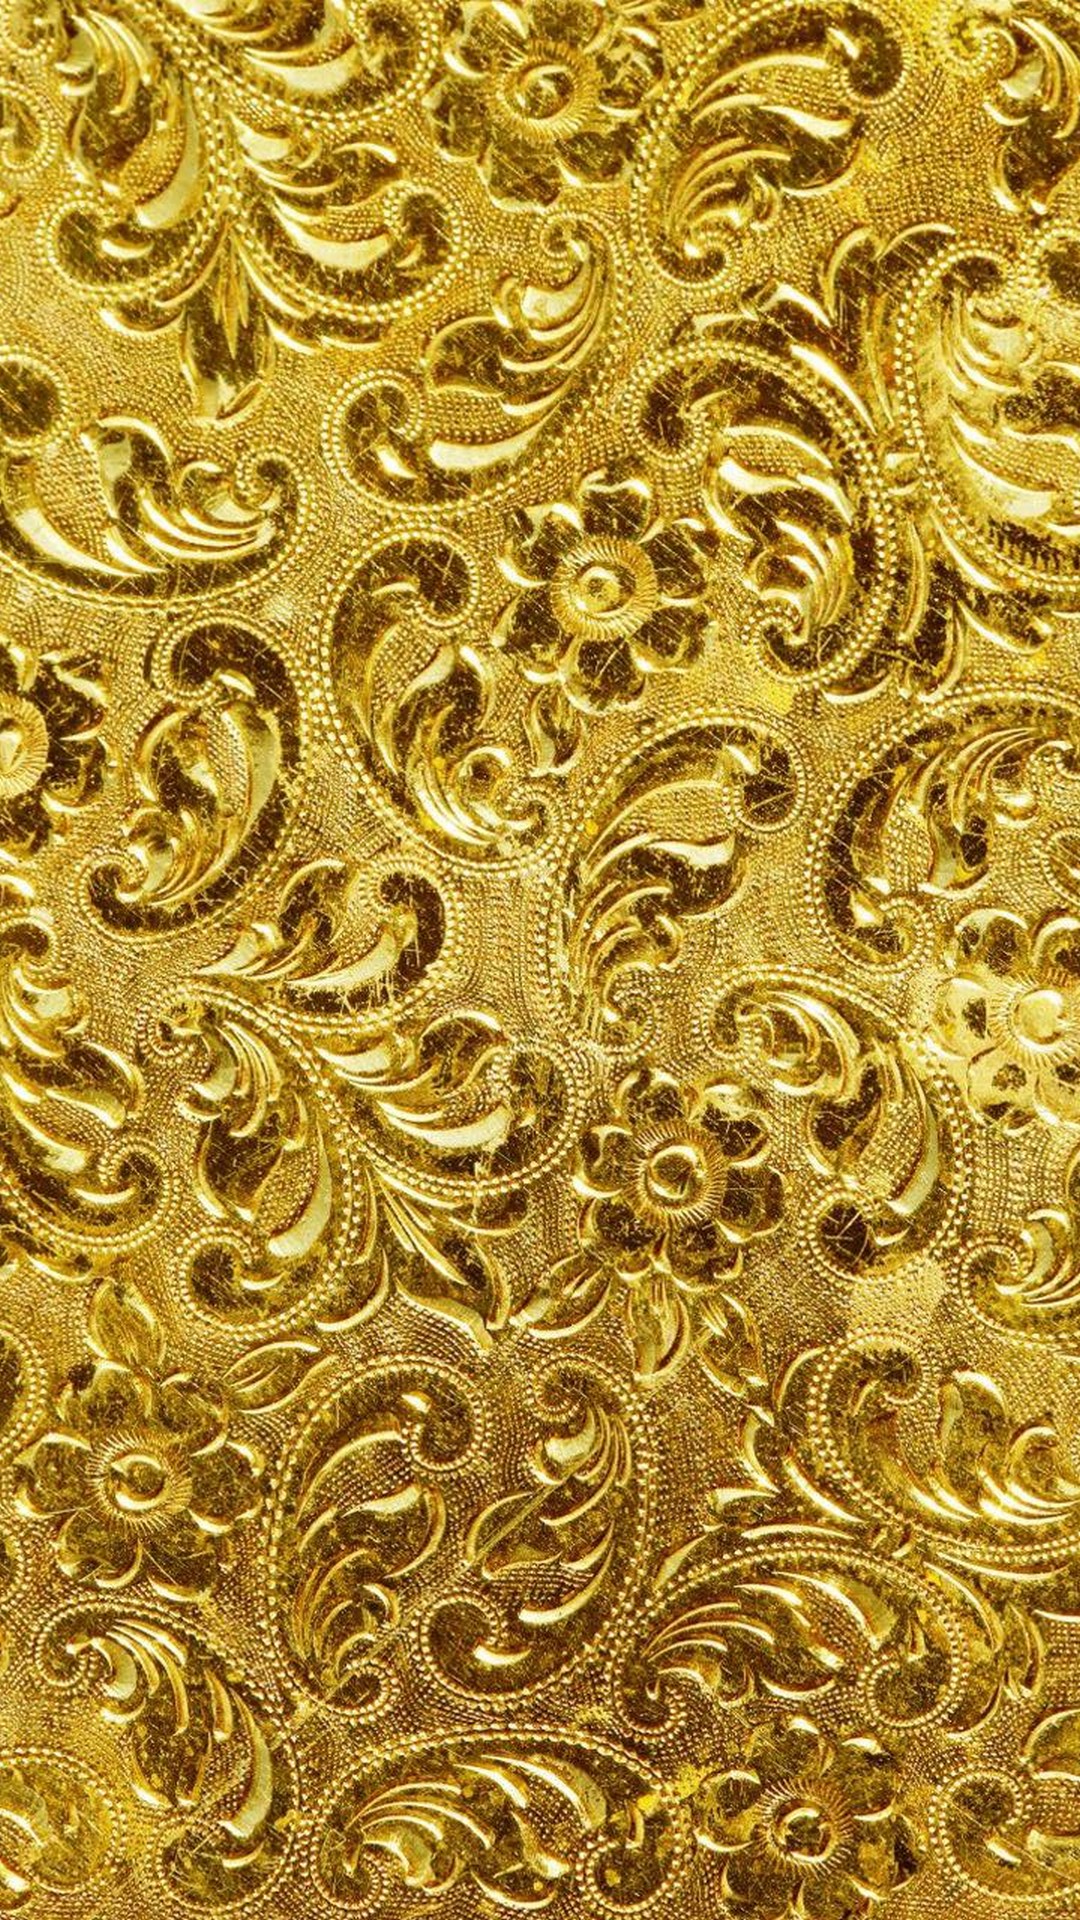 Iphone 7 Wallpaper Gold Designs Resolution Iphone7 ゴールド 壁紙 1080x19 Wallpaper Teahub Io